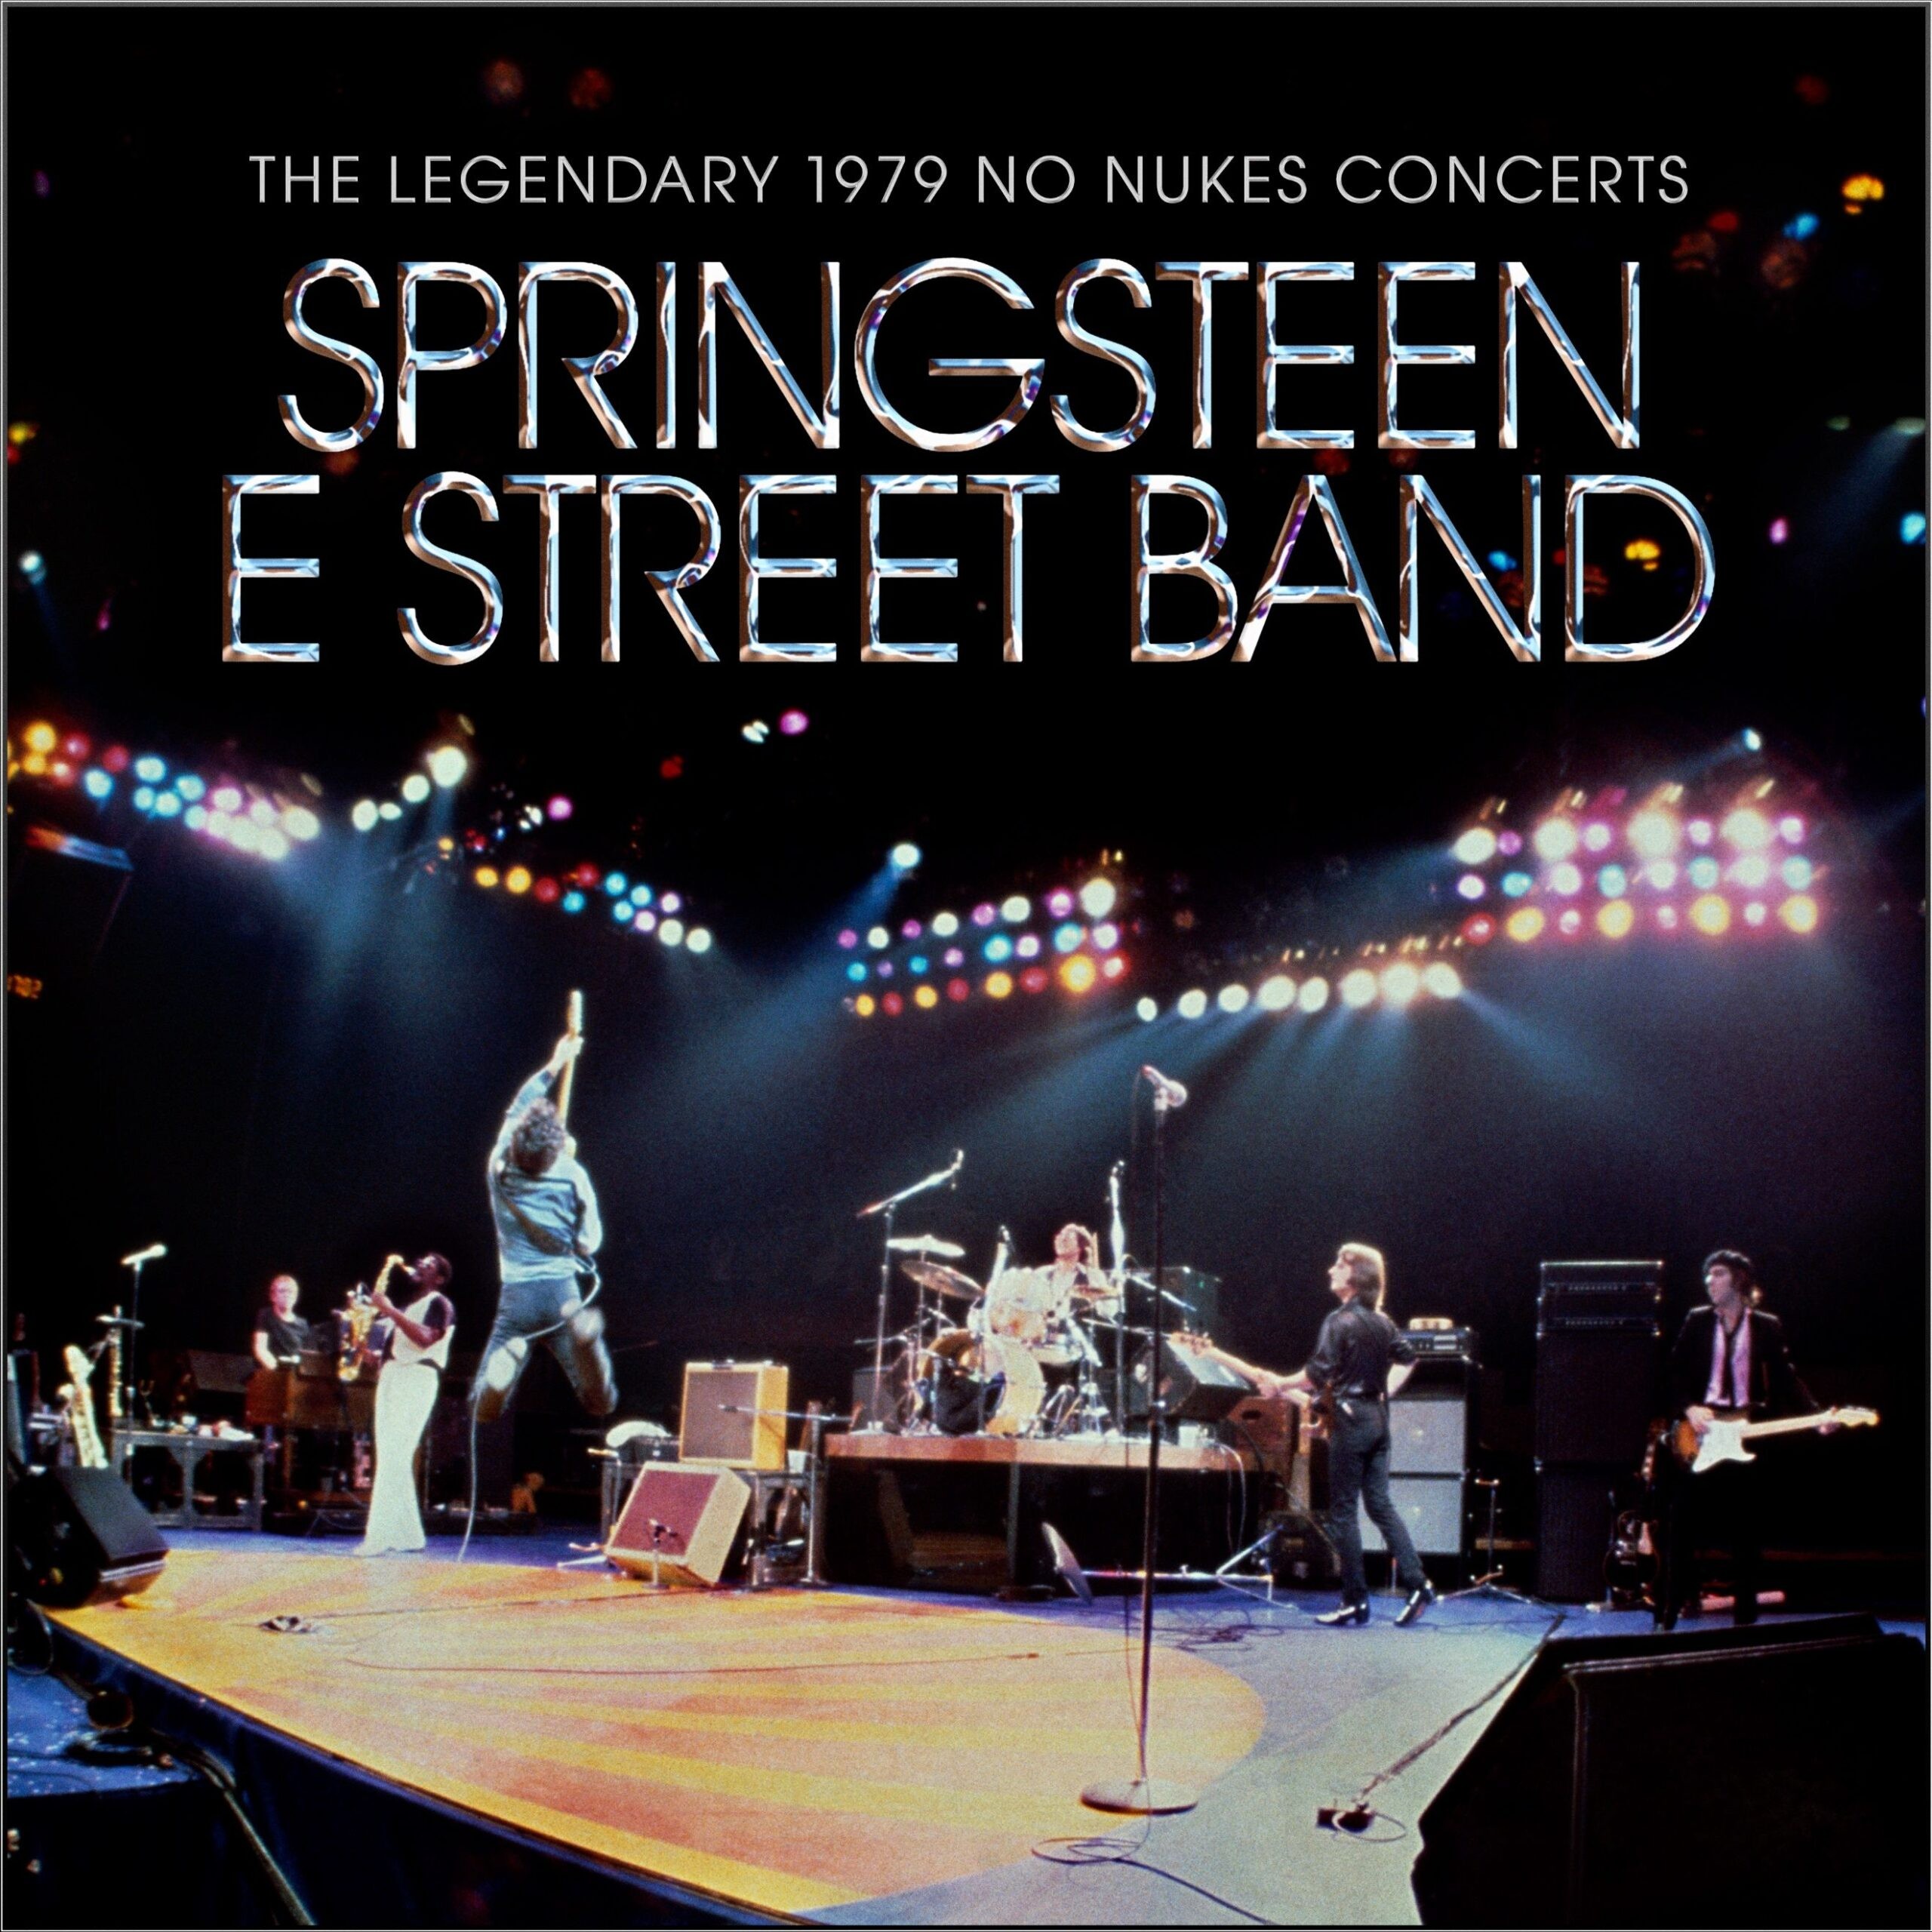 Bruce Springsteen & The E Street Band - Legendary 1979 No Nukes Concerts (2021) - 2CD+BRD